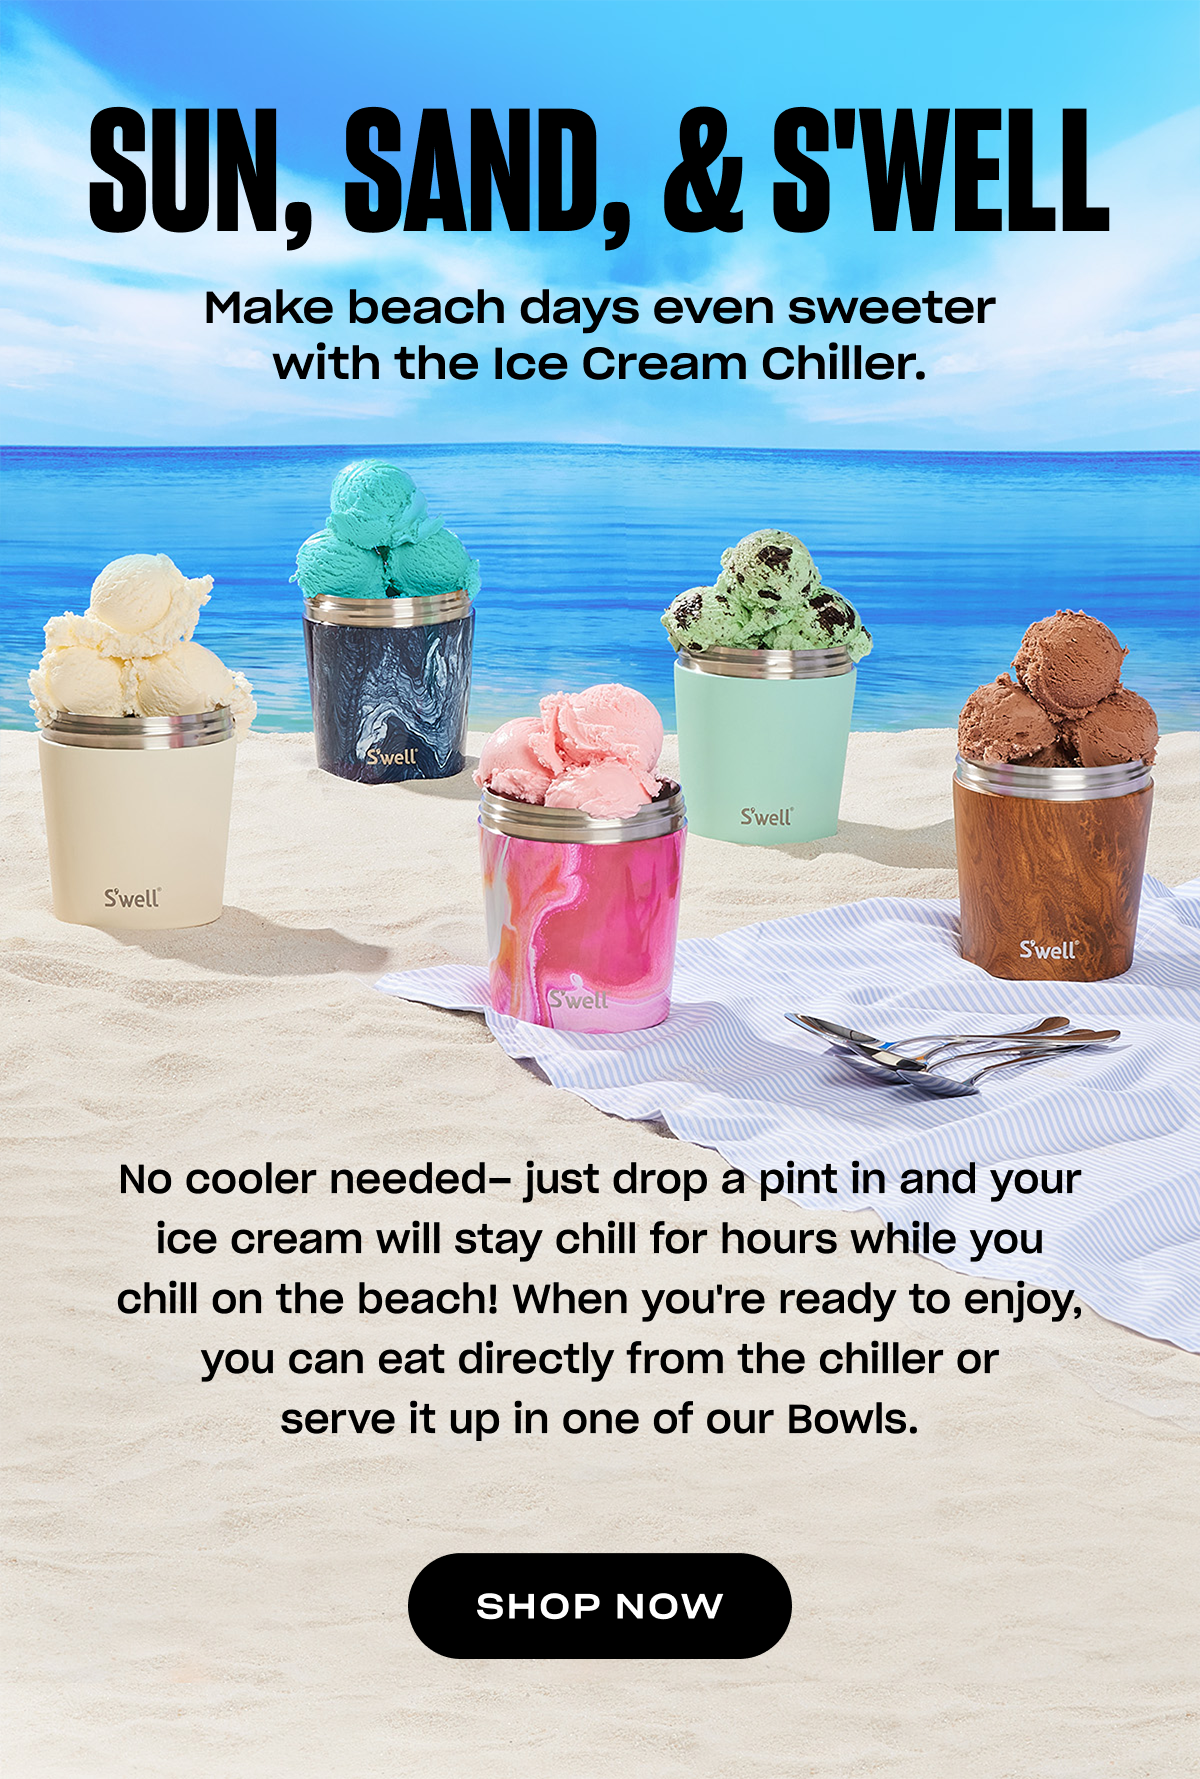 Ice Cream Pint Cooler